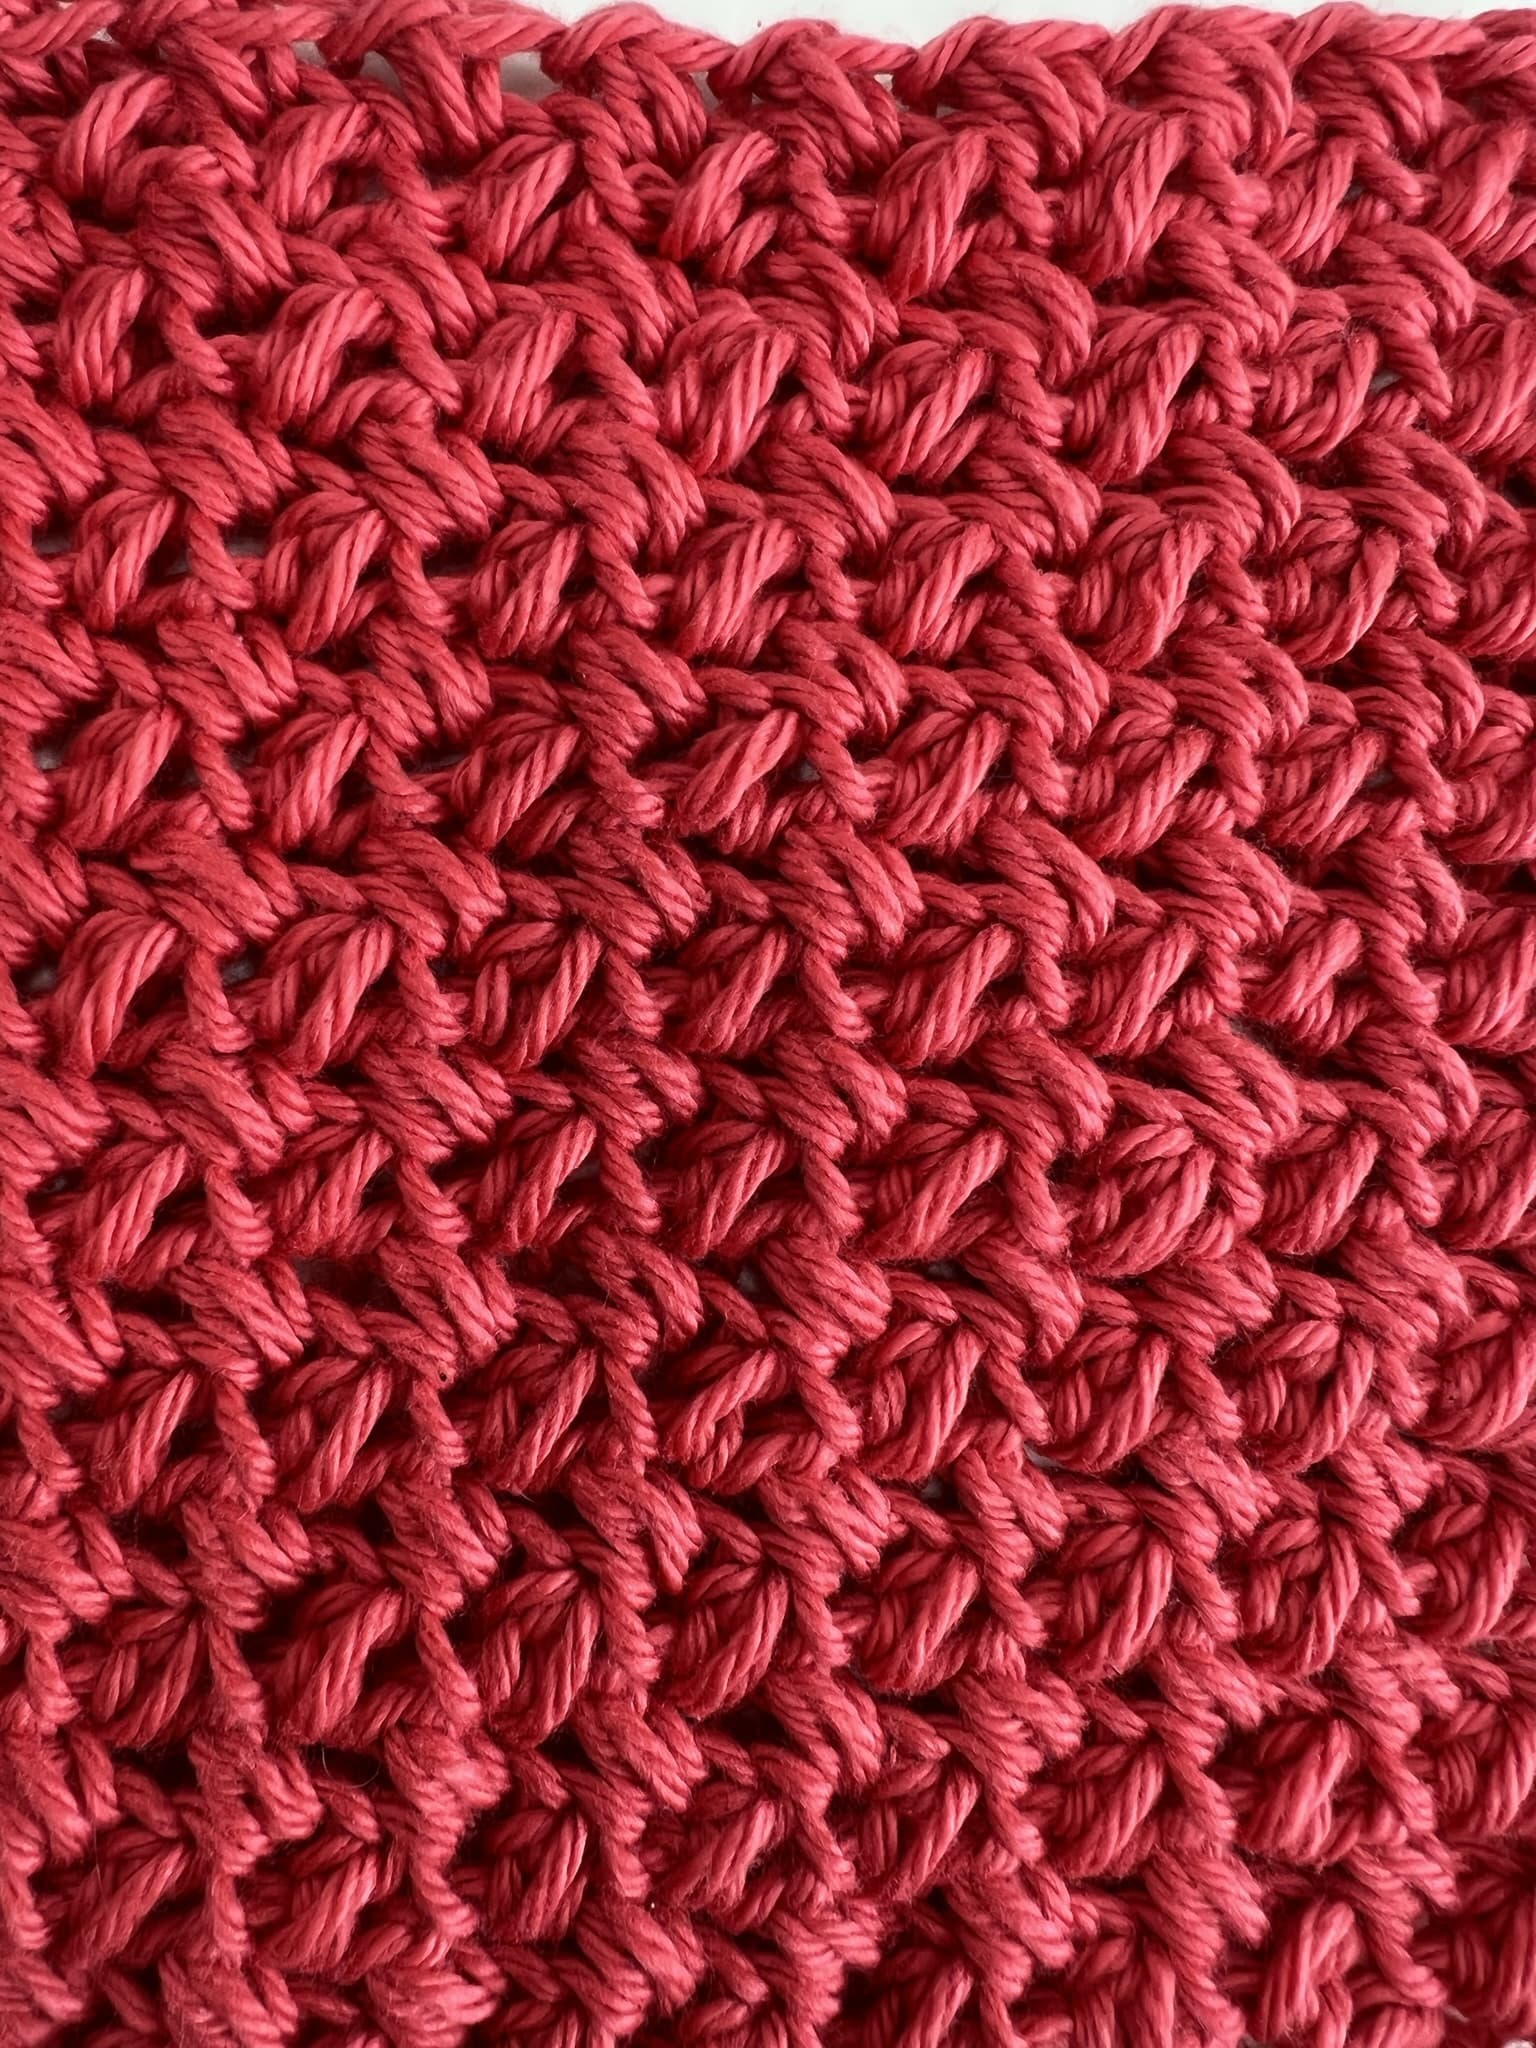 Mini Bean Stitch texture


